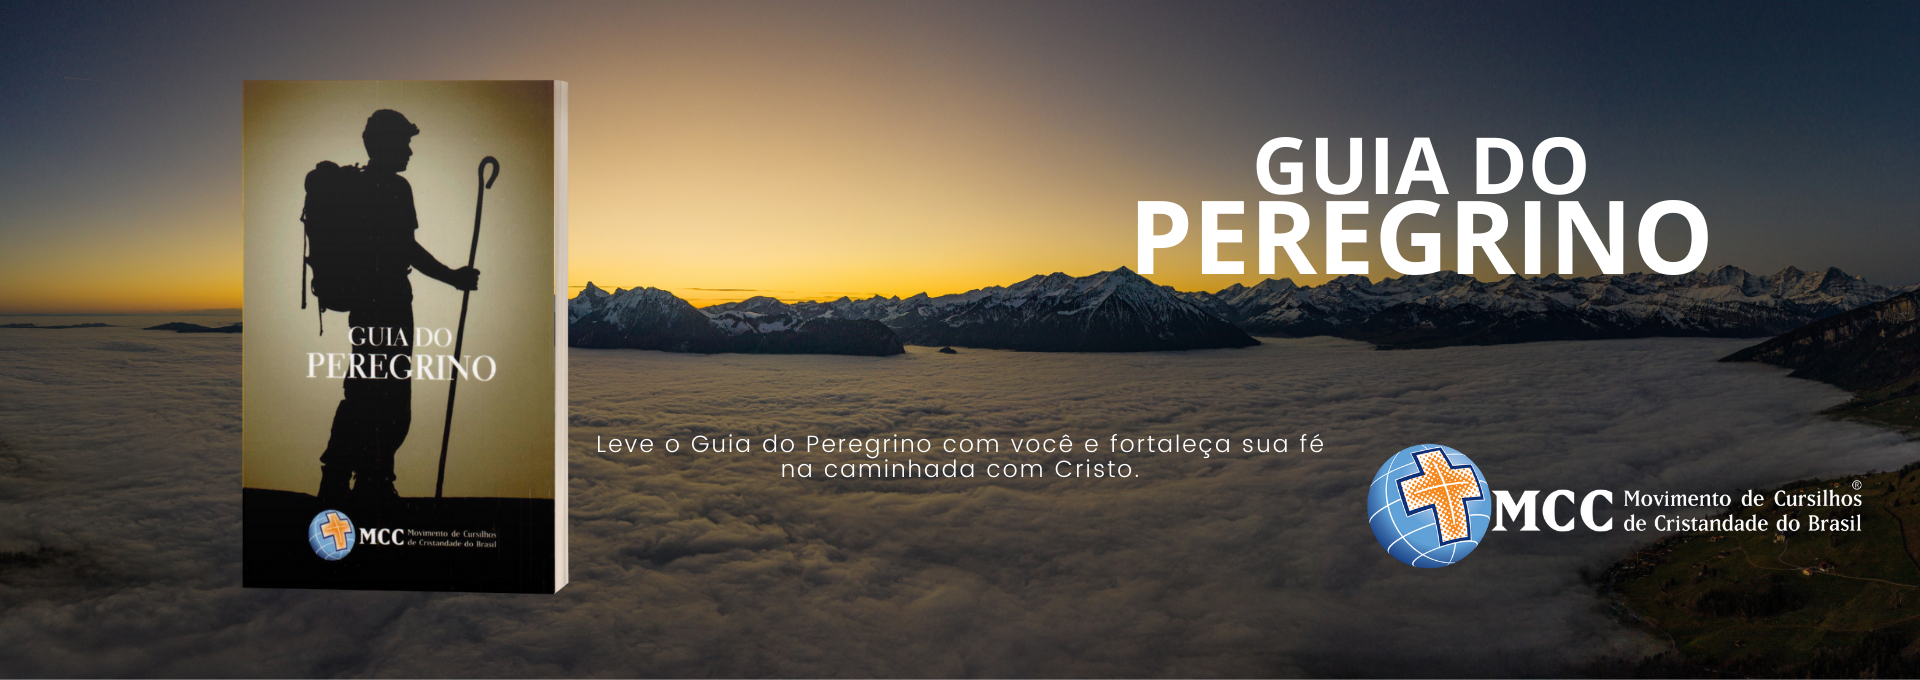 Guia do Peregrino_MCC_BRASIL